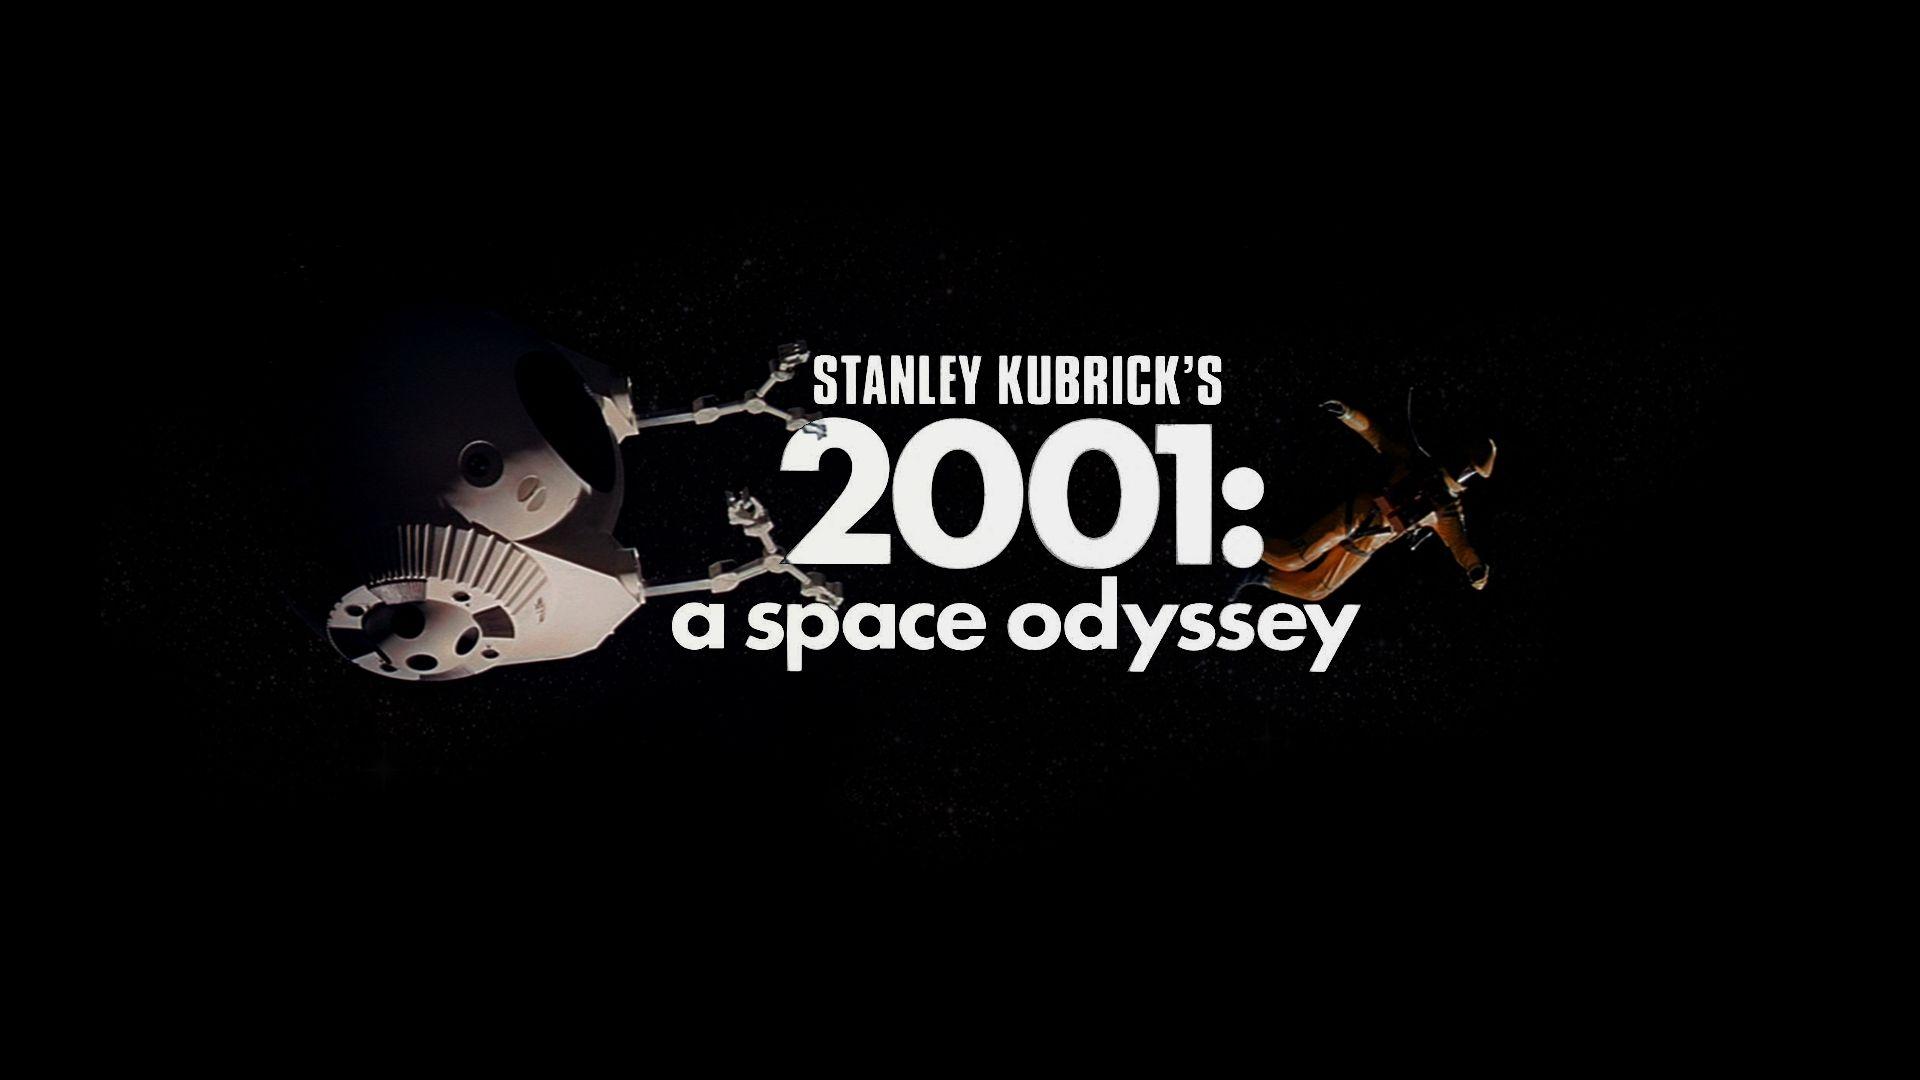 A Space Odyssey HD Wallpaper. m00ch's m00vies